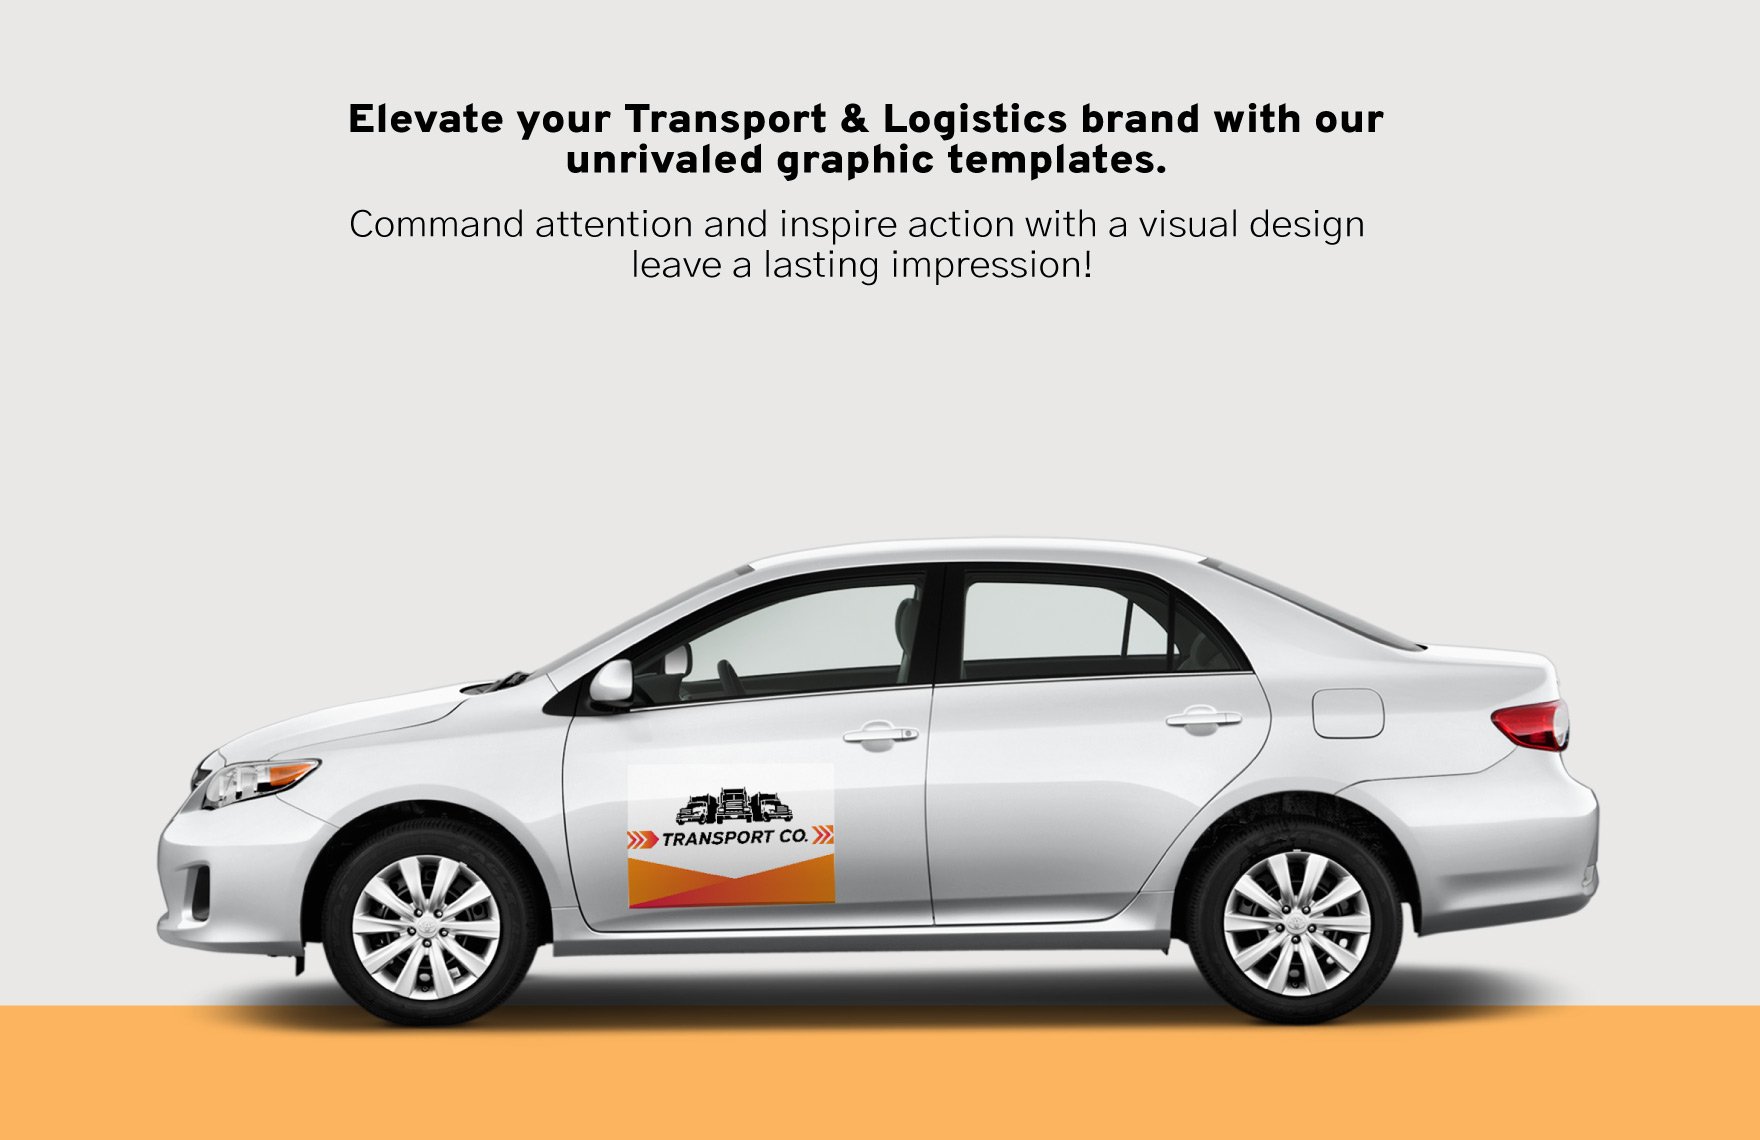 Transport and Logistics Car Magnet Design Template - Download in